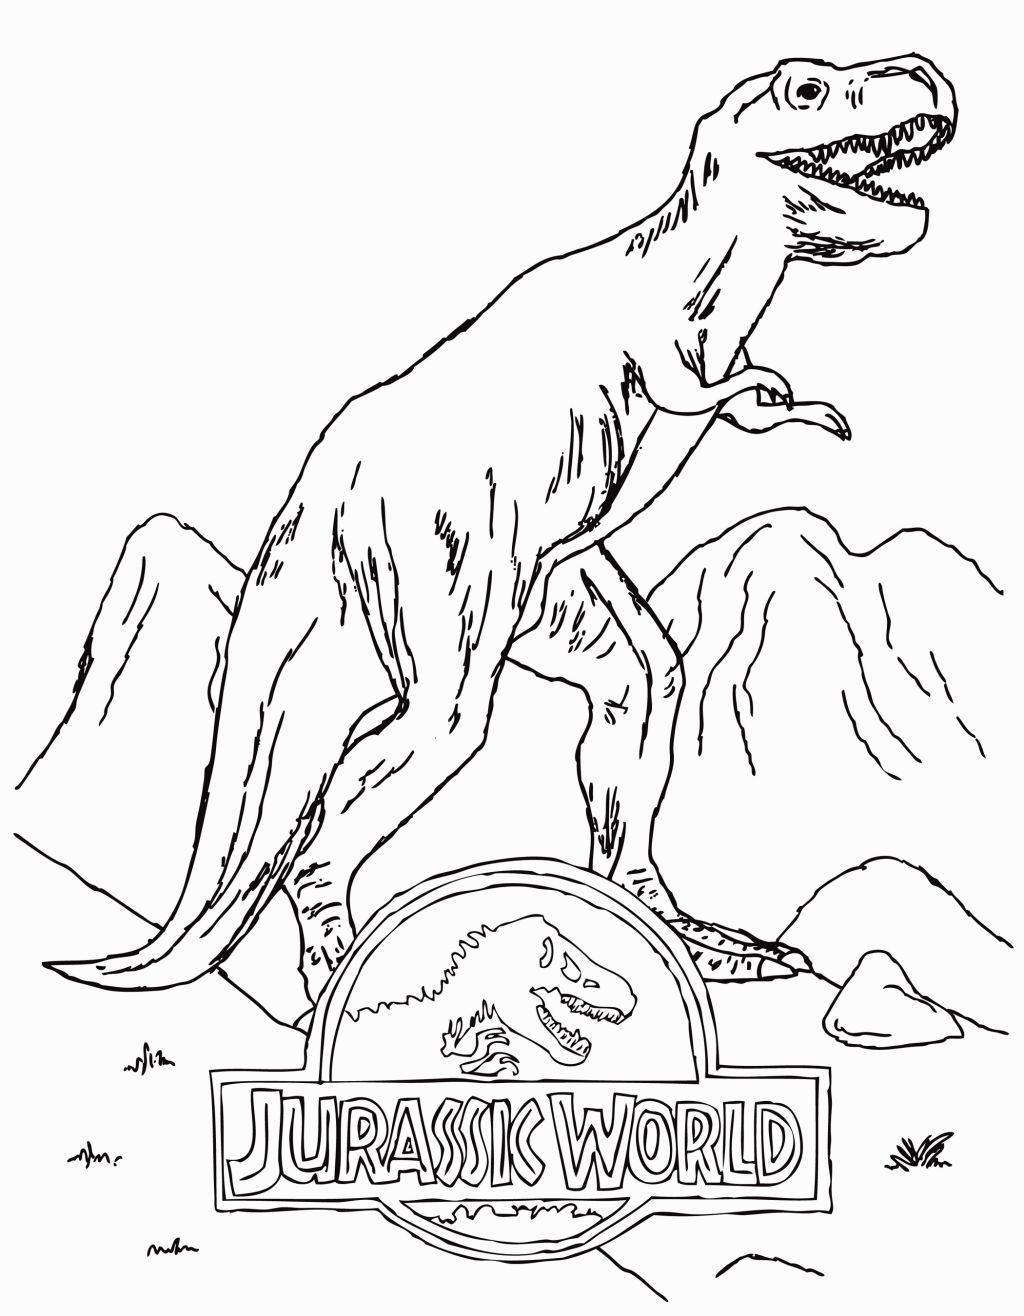 Logo Jurassic World With T-Rex